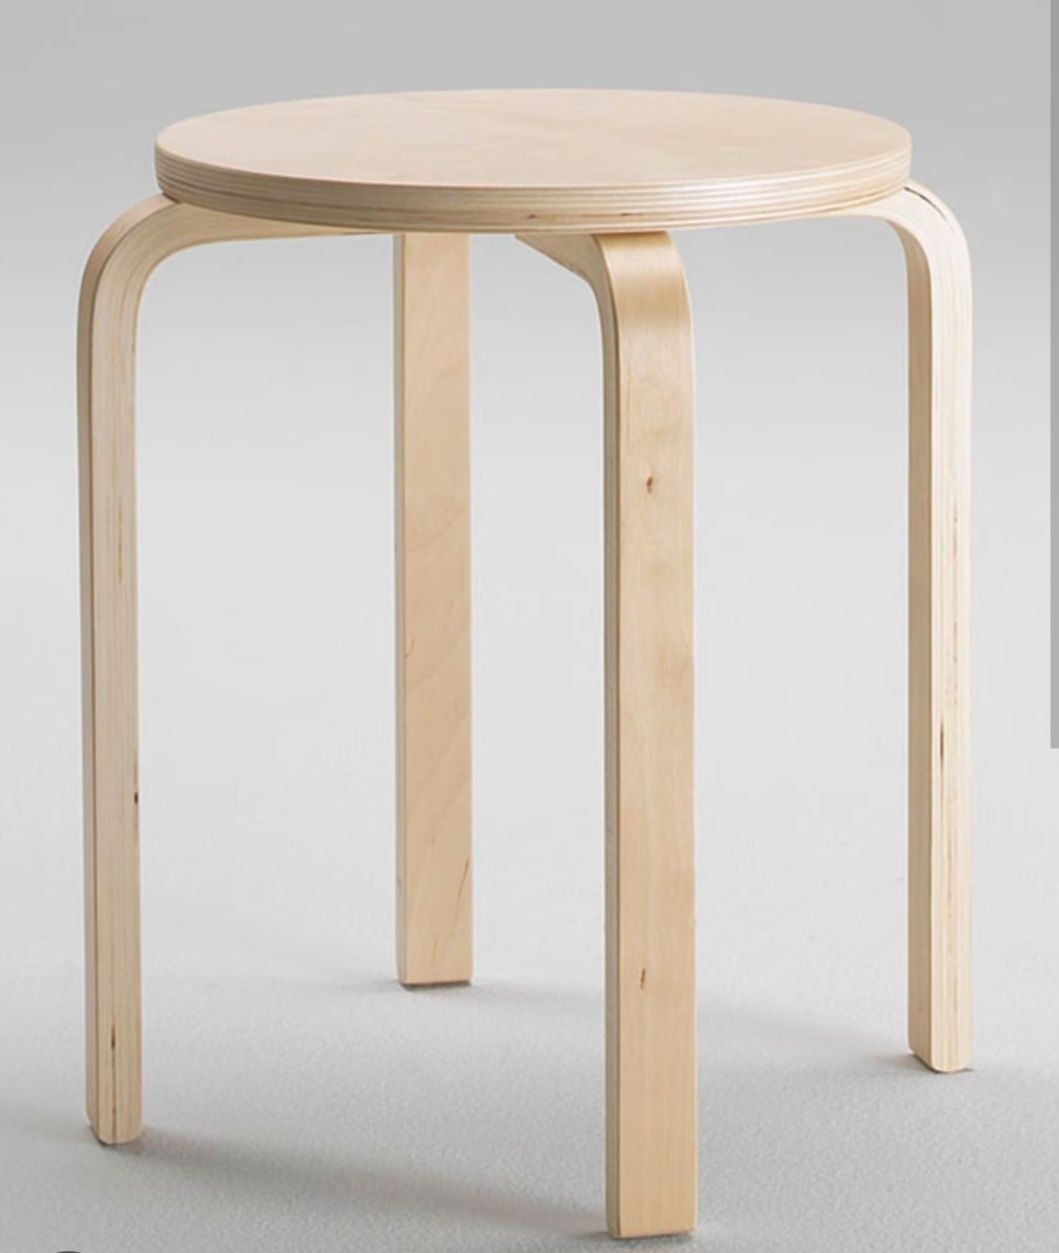 Ikea Frosta taboret stołek